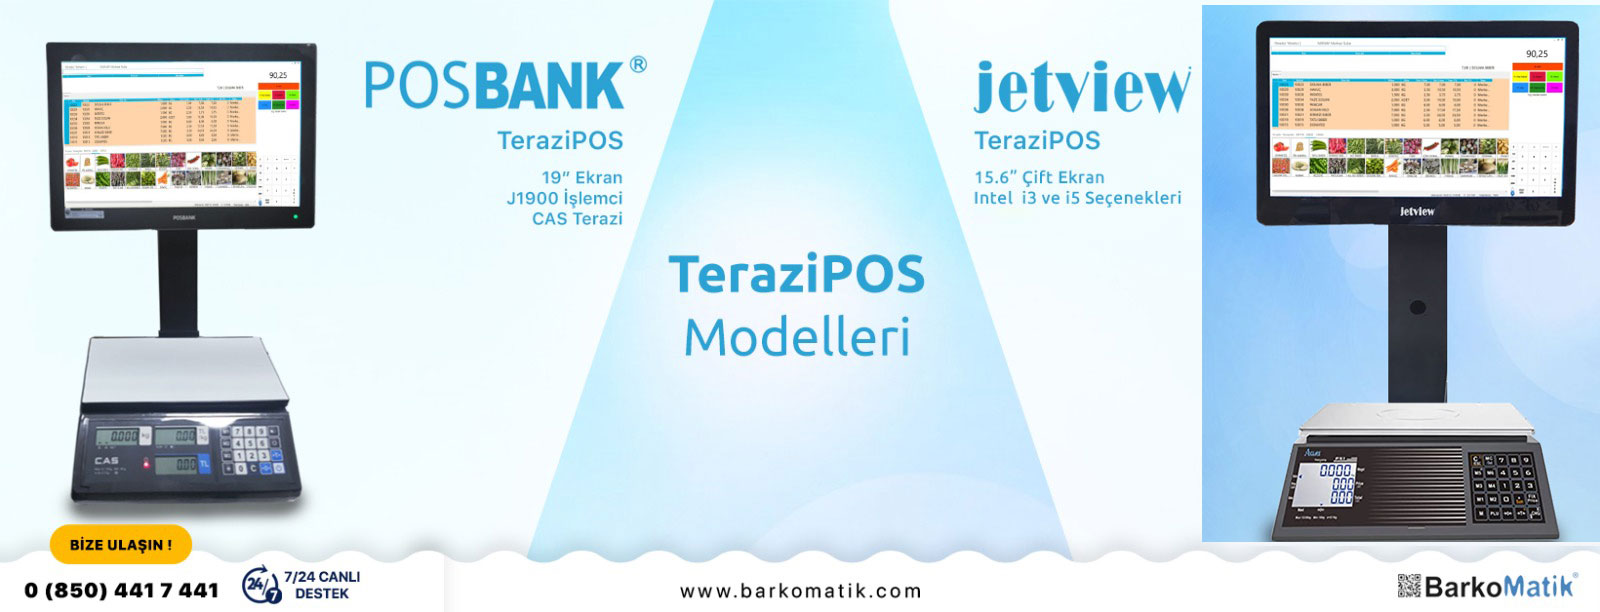 Posbank - Jetview TeraziPOS